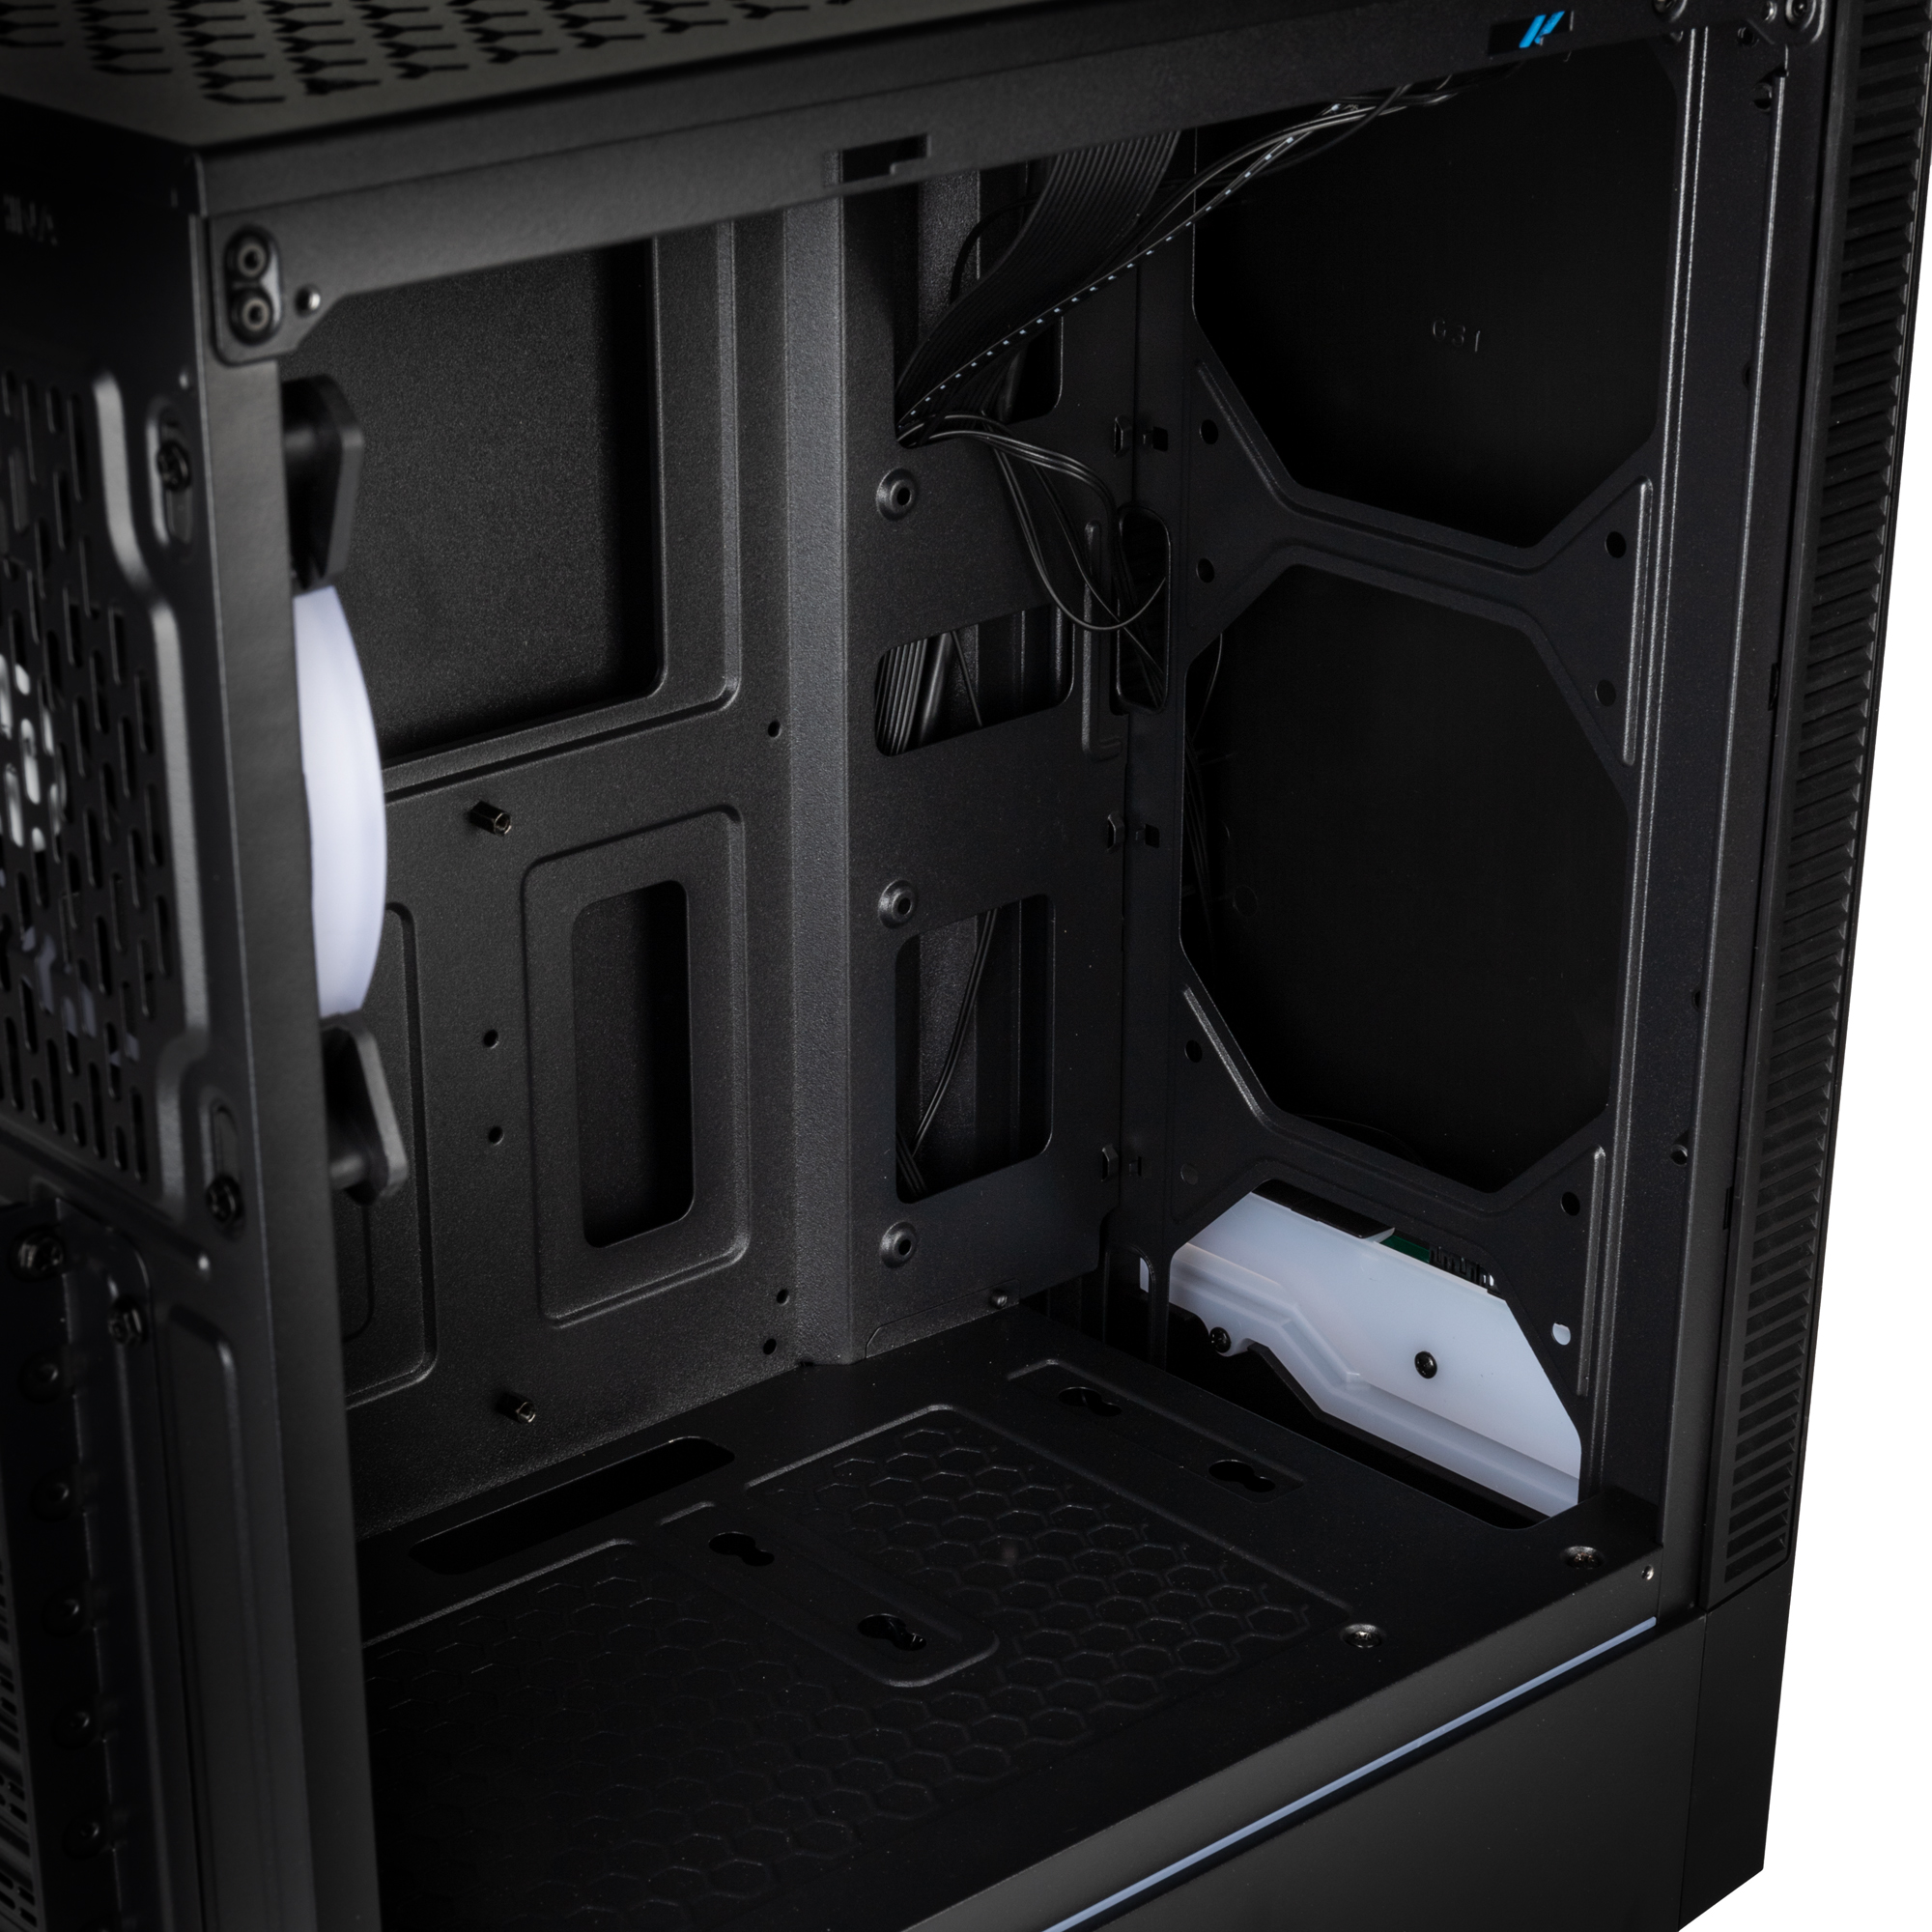 Kolink - Kolink Inspire Series K9 ARGB Midi Tower Gaming Case - Black